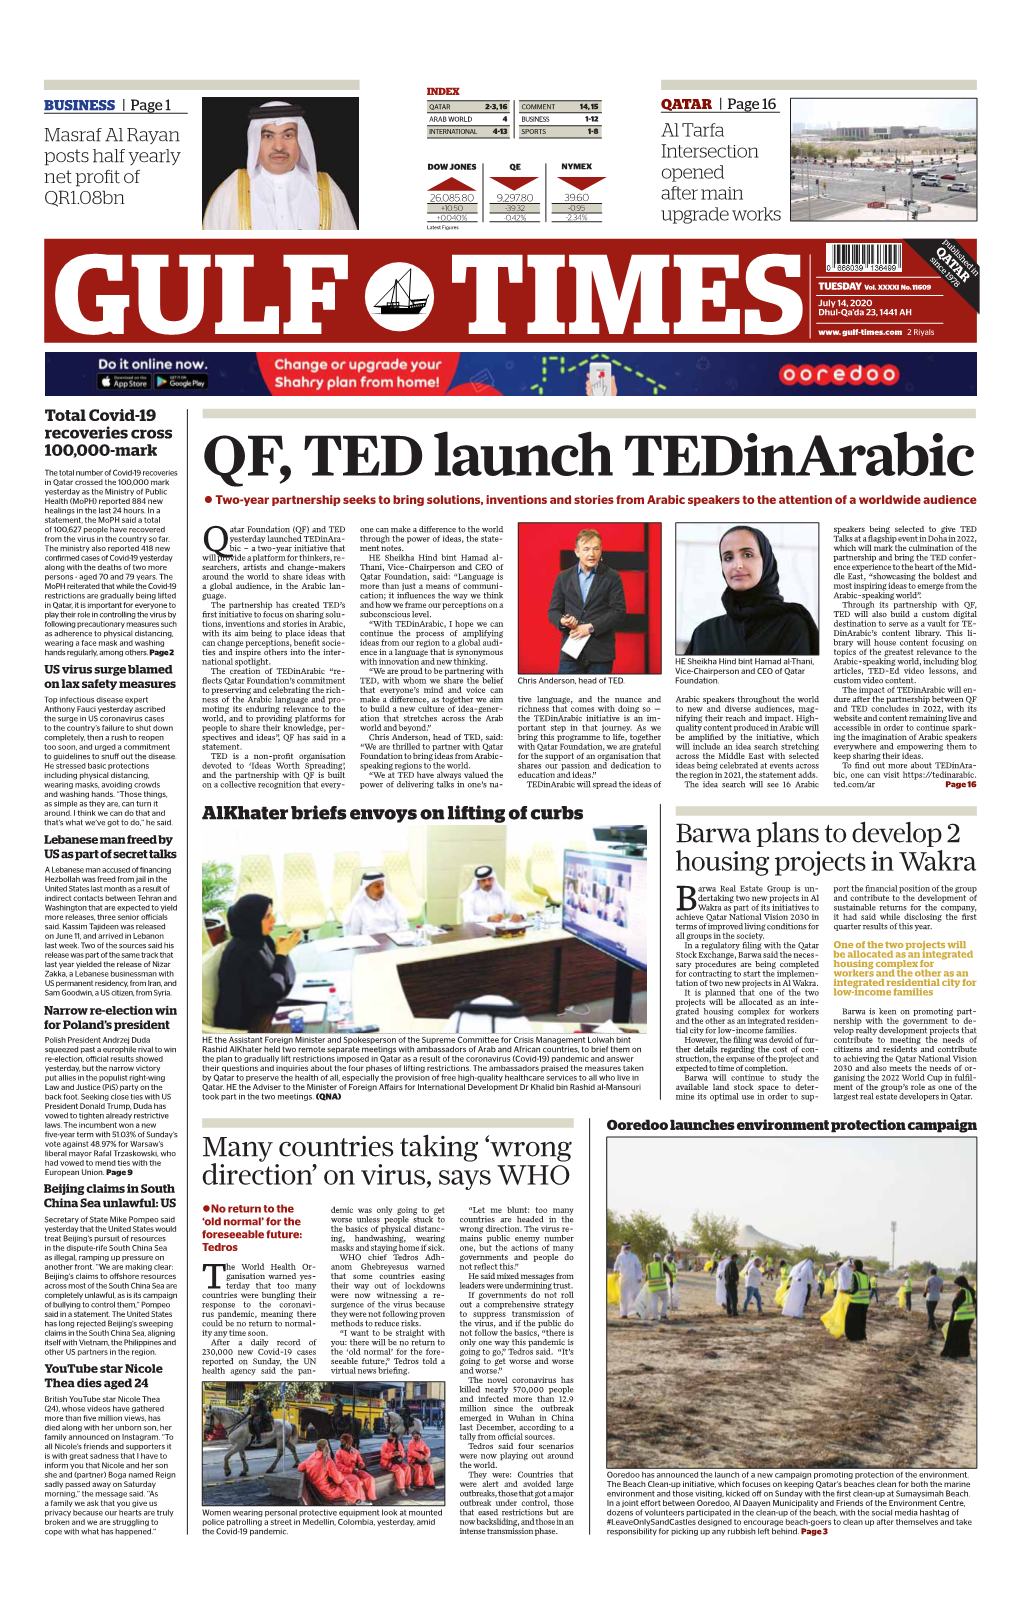 QF, TED Launch Tedinarabic